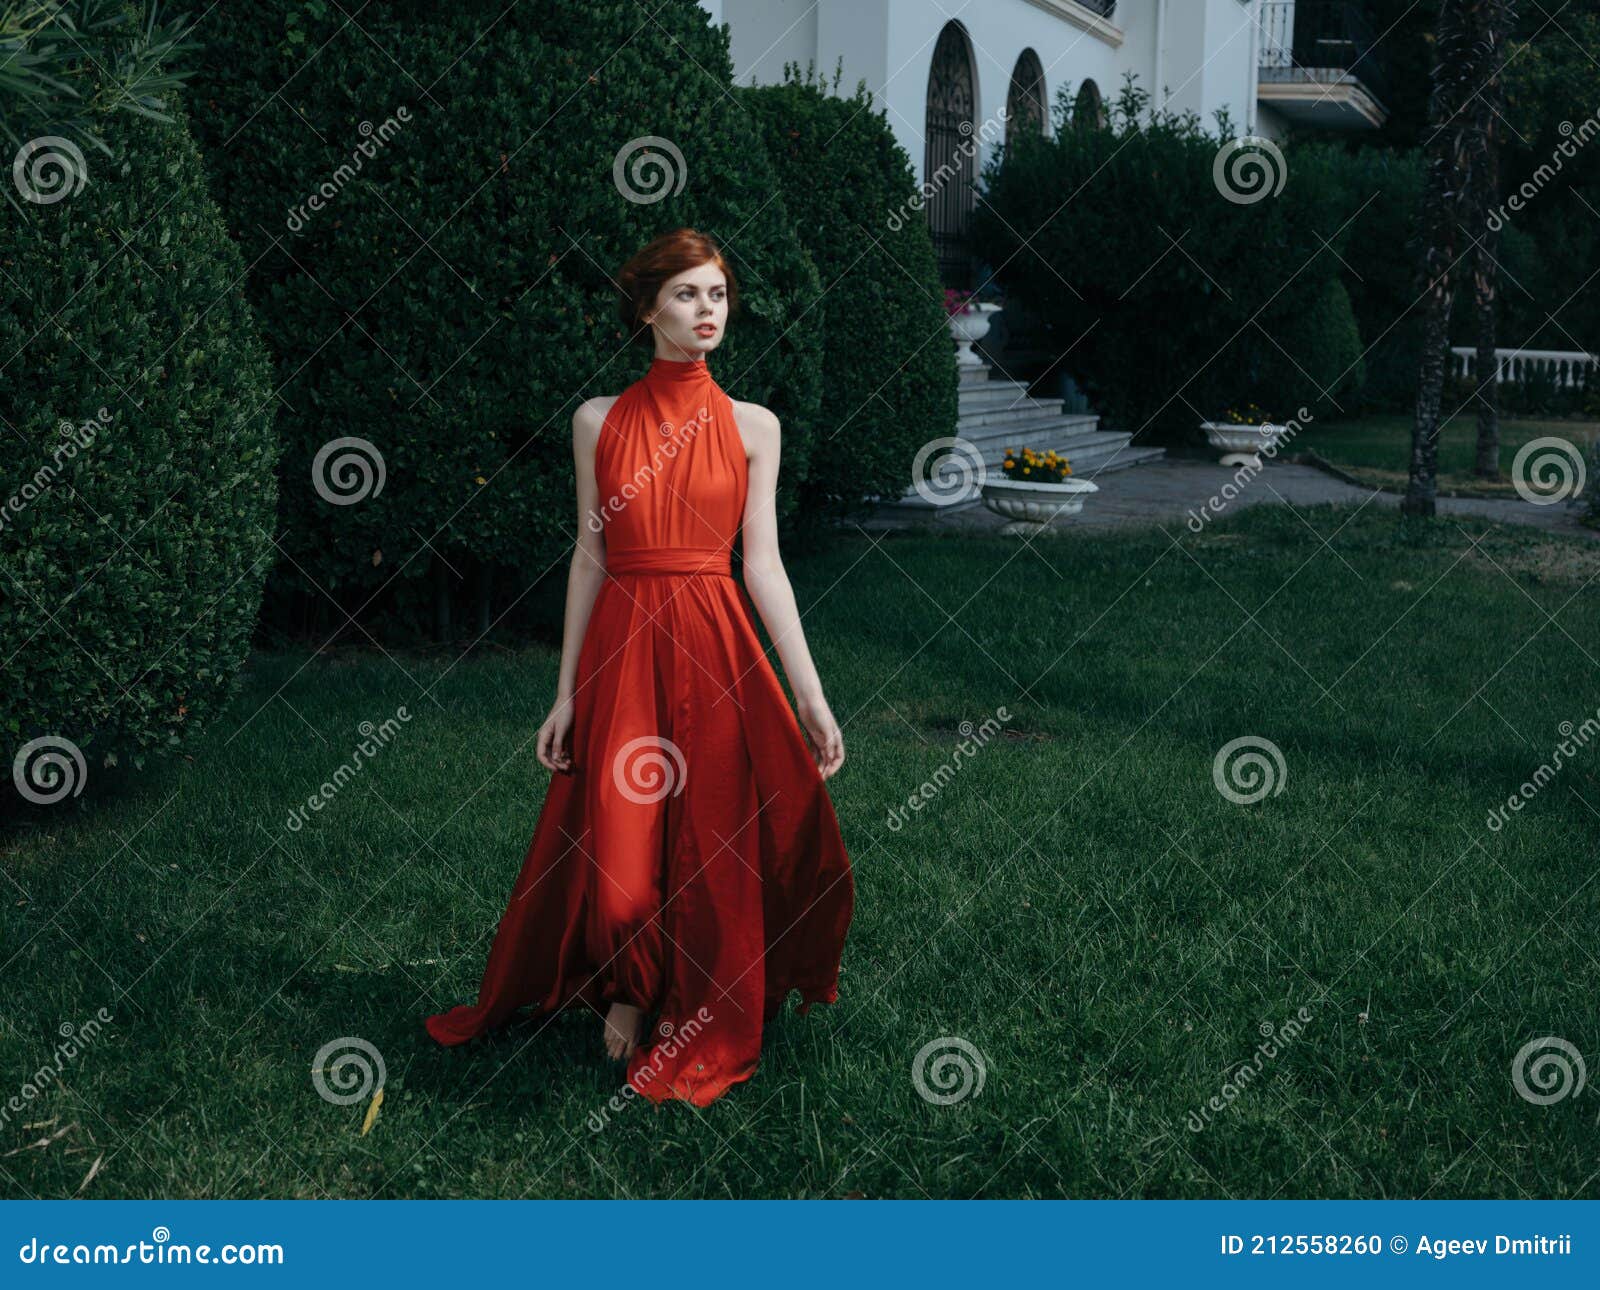 You Can Own the Julia Roberts' 'Pretty Woman' Dress